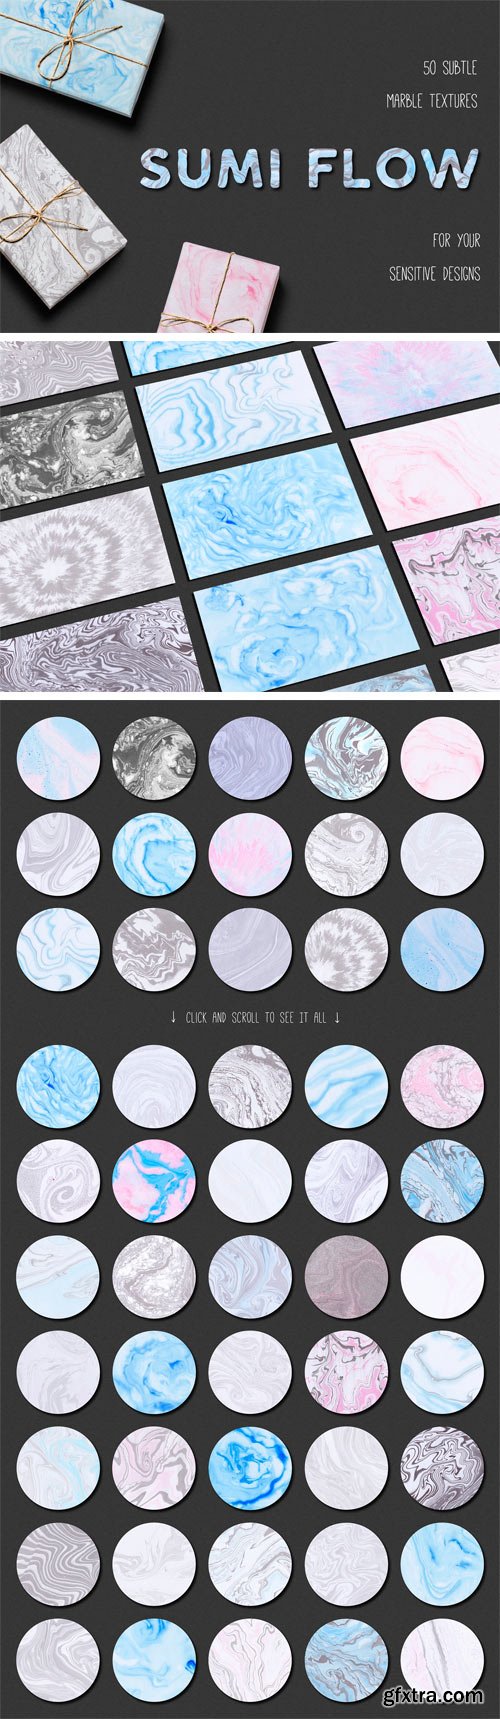 CM 1234997 - Sumi Flow. 50 Marble Textures